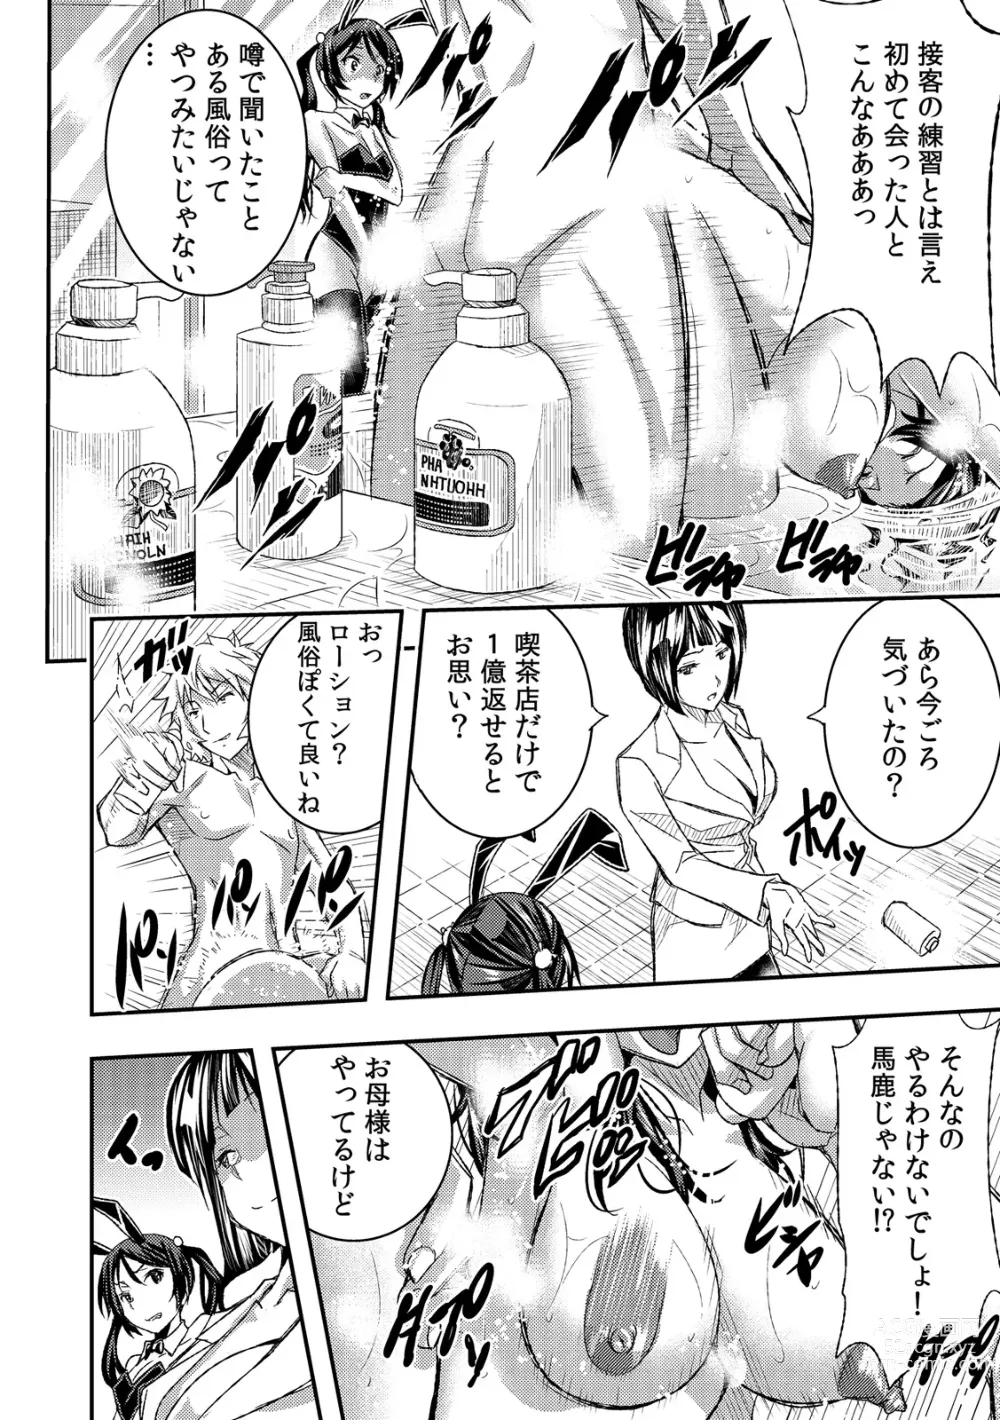 Page 46 of manga Fuuzoku Ittara Osananajimi ga Tsukkomareteita Ken ww 1-2 Full Color